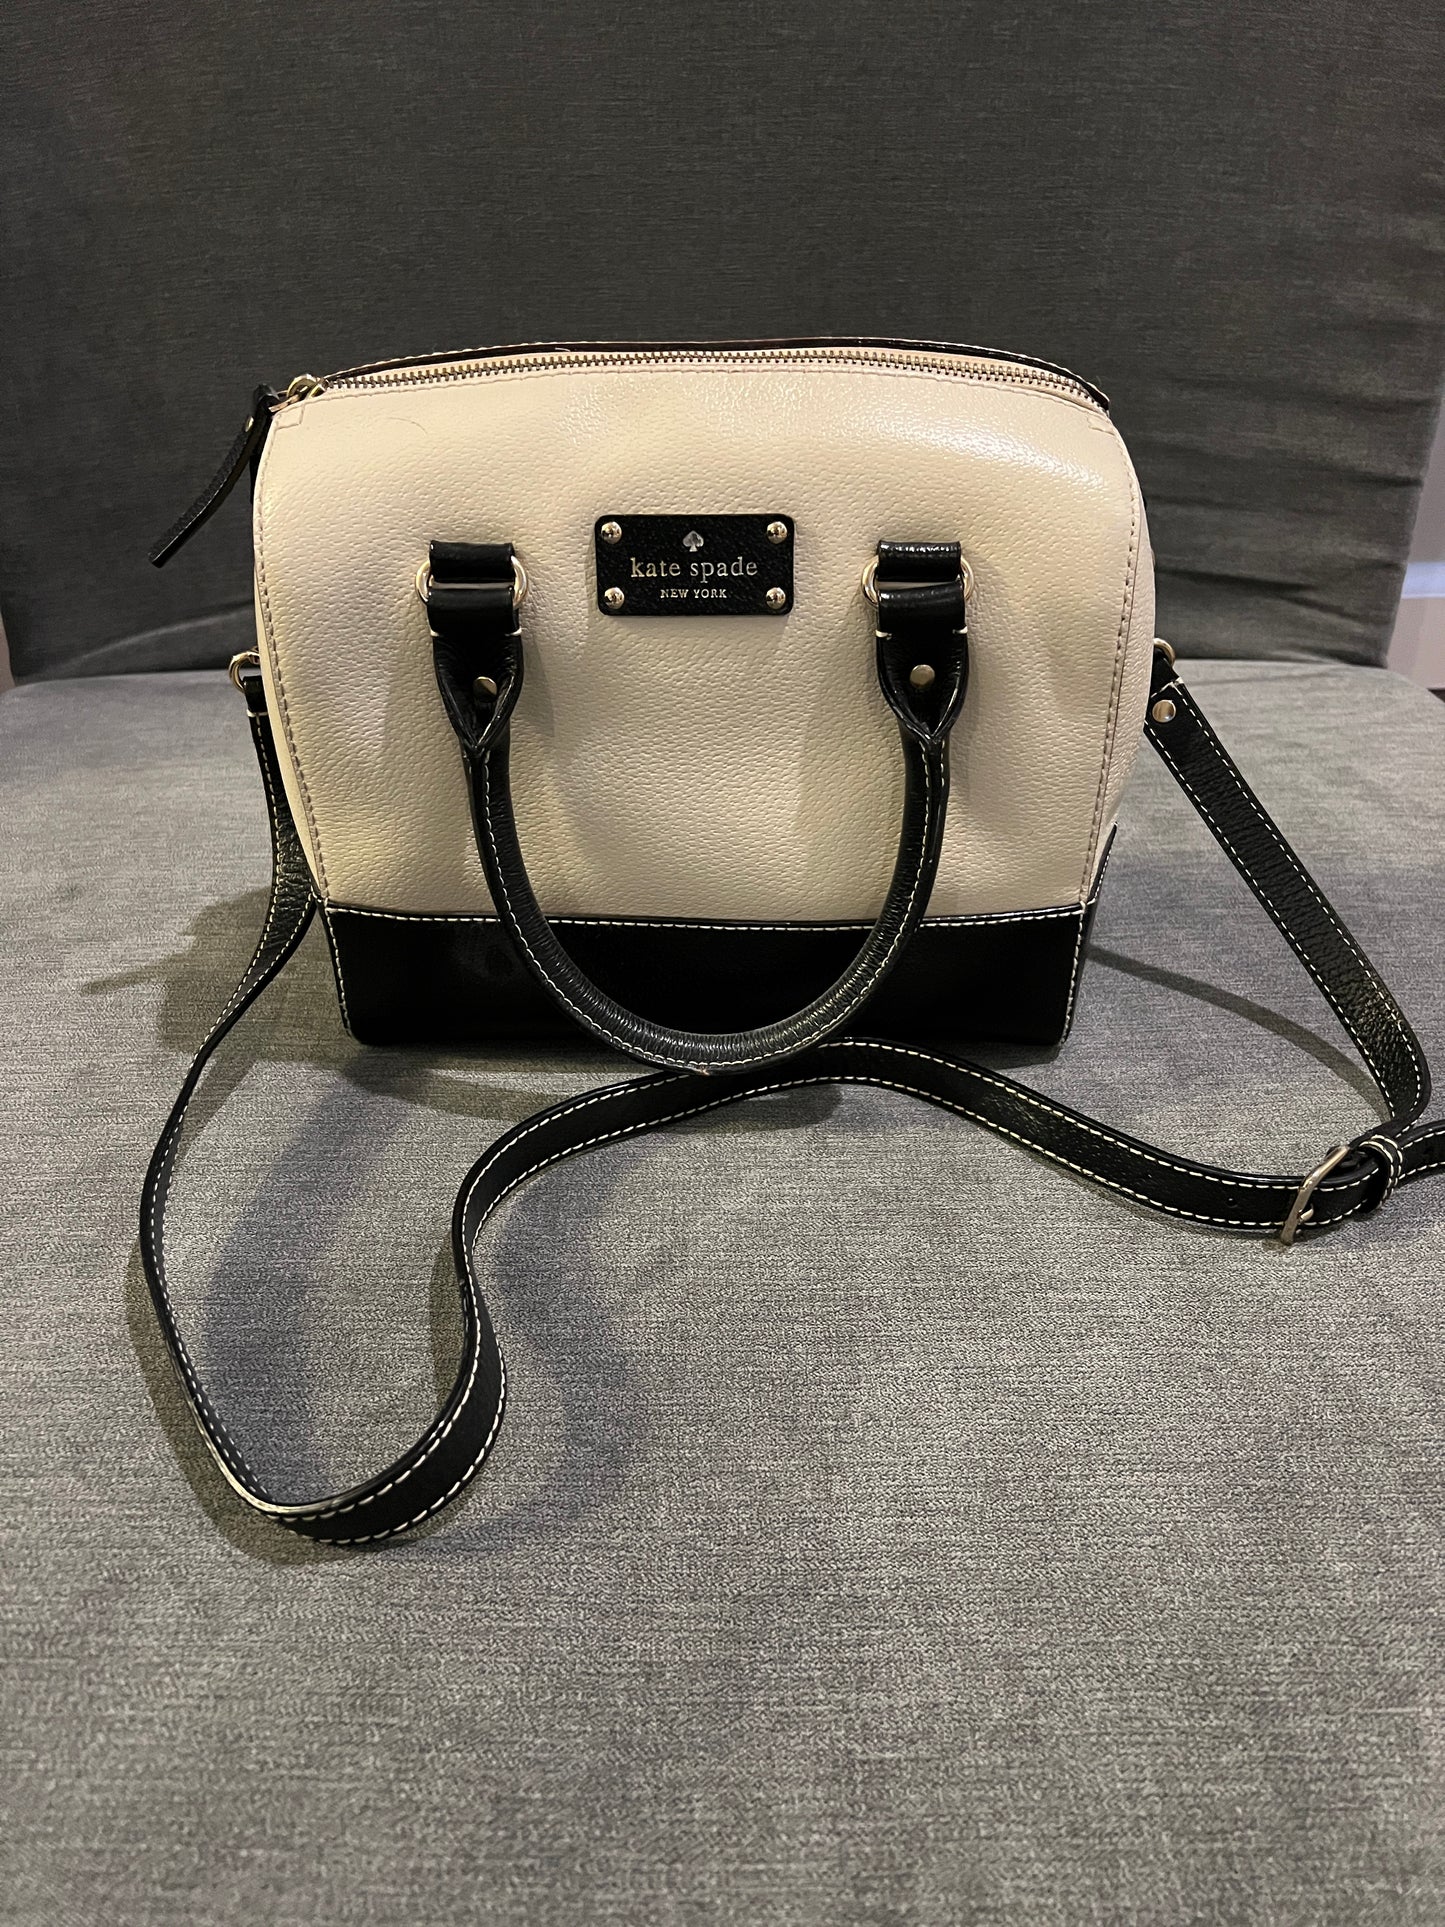 Kate Spade Black & White Handbag- PPU 45044 (Liberty Twp)